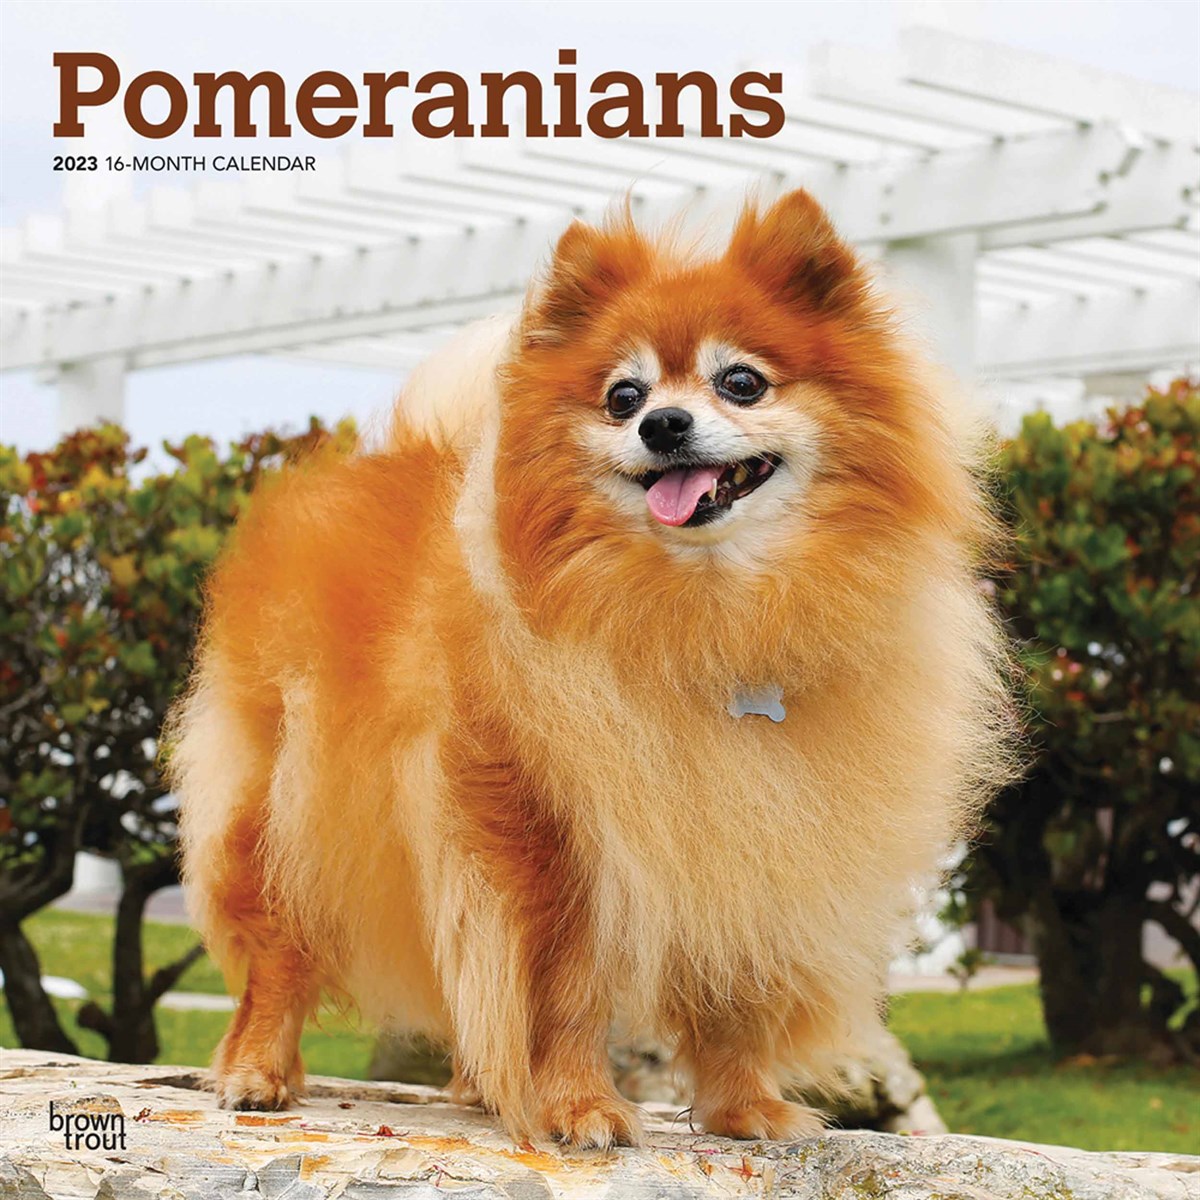 Pomeranians 2023 Calendars